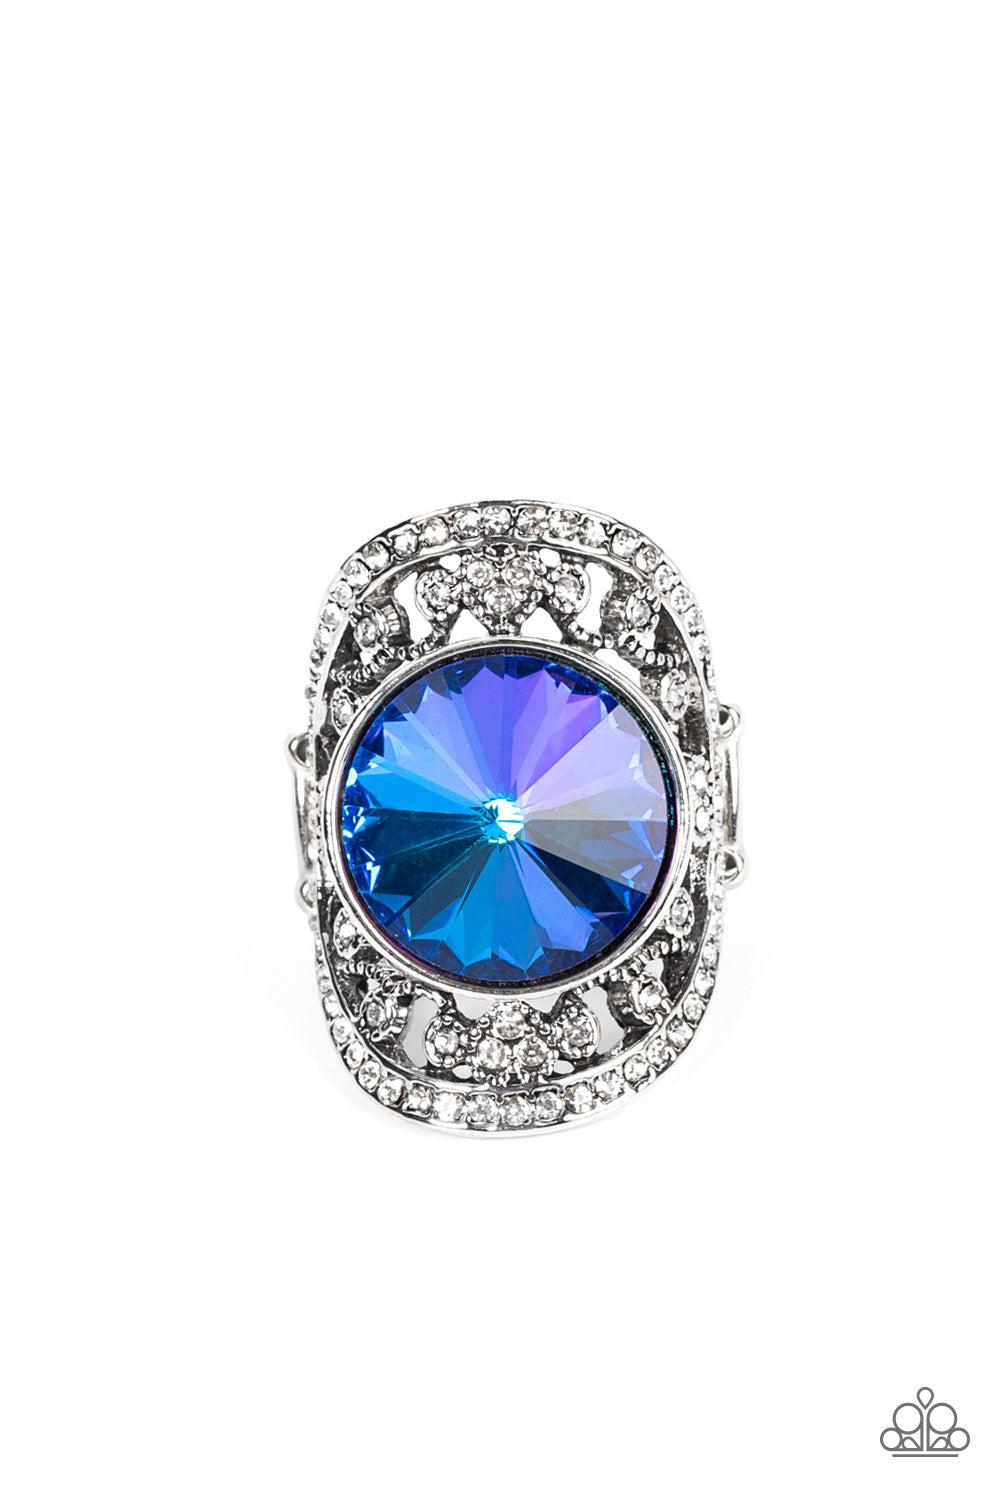 Galactic Garden Blue Iridescent Gem Ring - Paparazzi Accessories- lightbox - CarasShop.com - $5 Jewelry by Cara Jewels